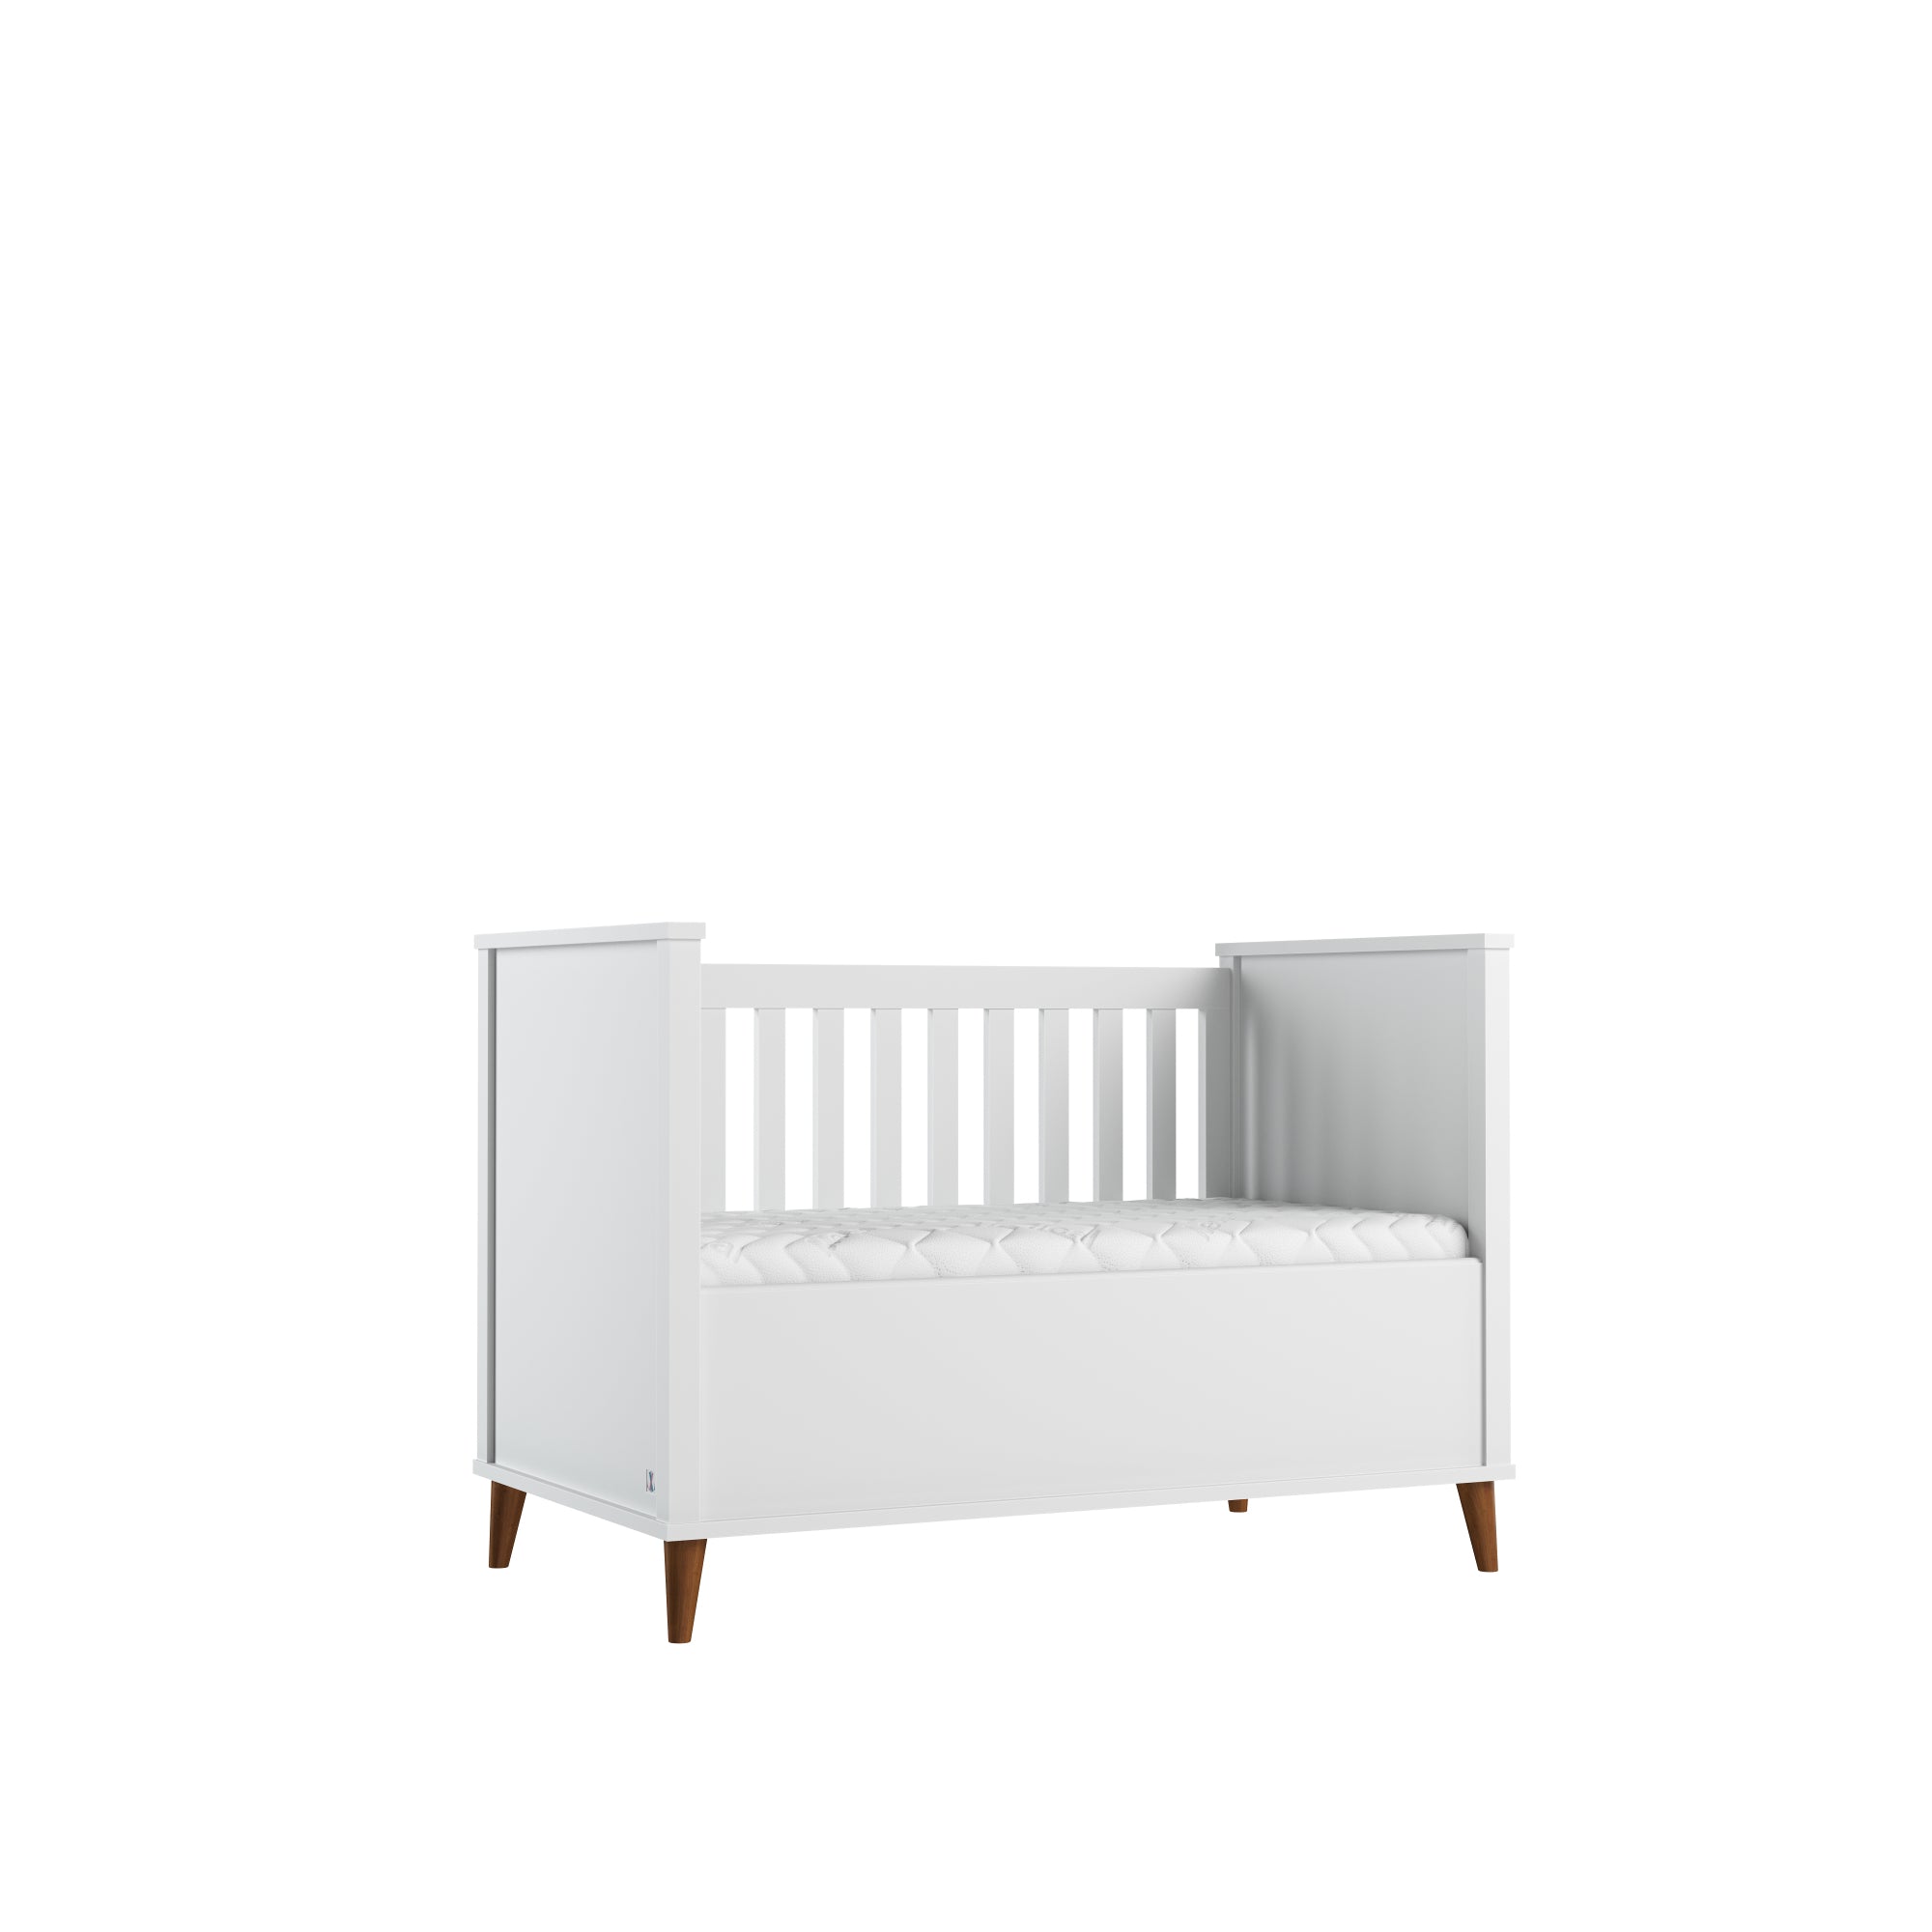 4 in 1 convertible baby bed NORDIC 70x140 cm white | high quality children furniture | scandinavian nursery design